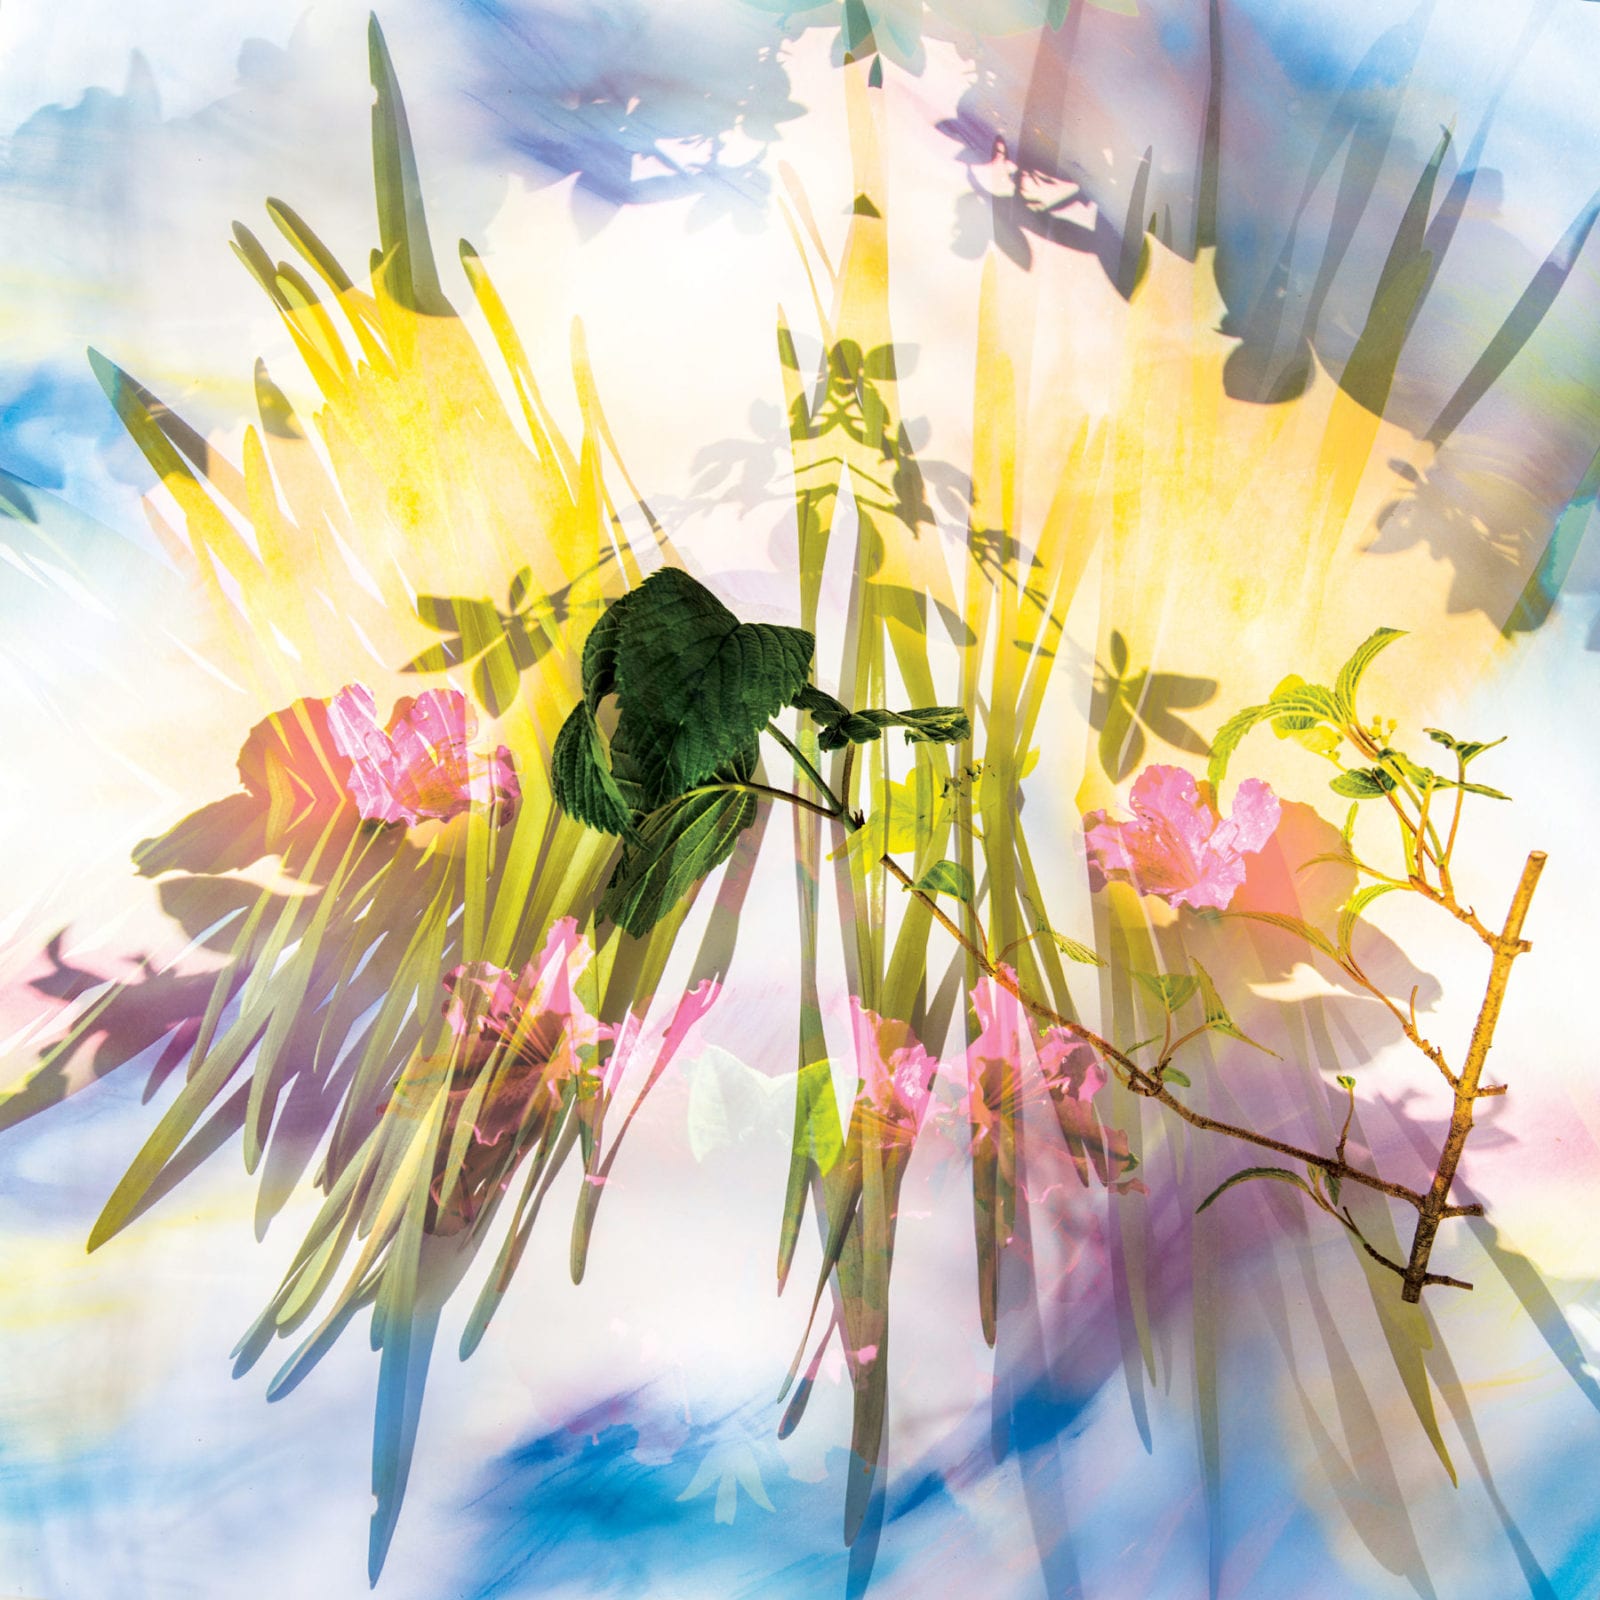 Maureen Bennett, Quarantine Backyard Mandala ~ Ascending Leaves, mixed media: pastels, paint, photography, 18 x 18 inches